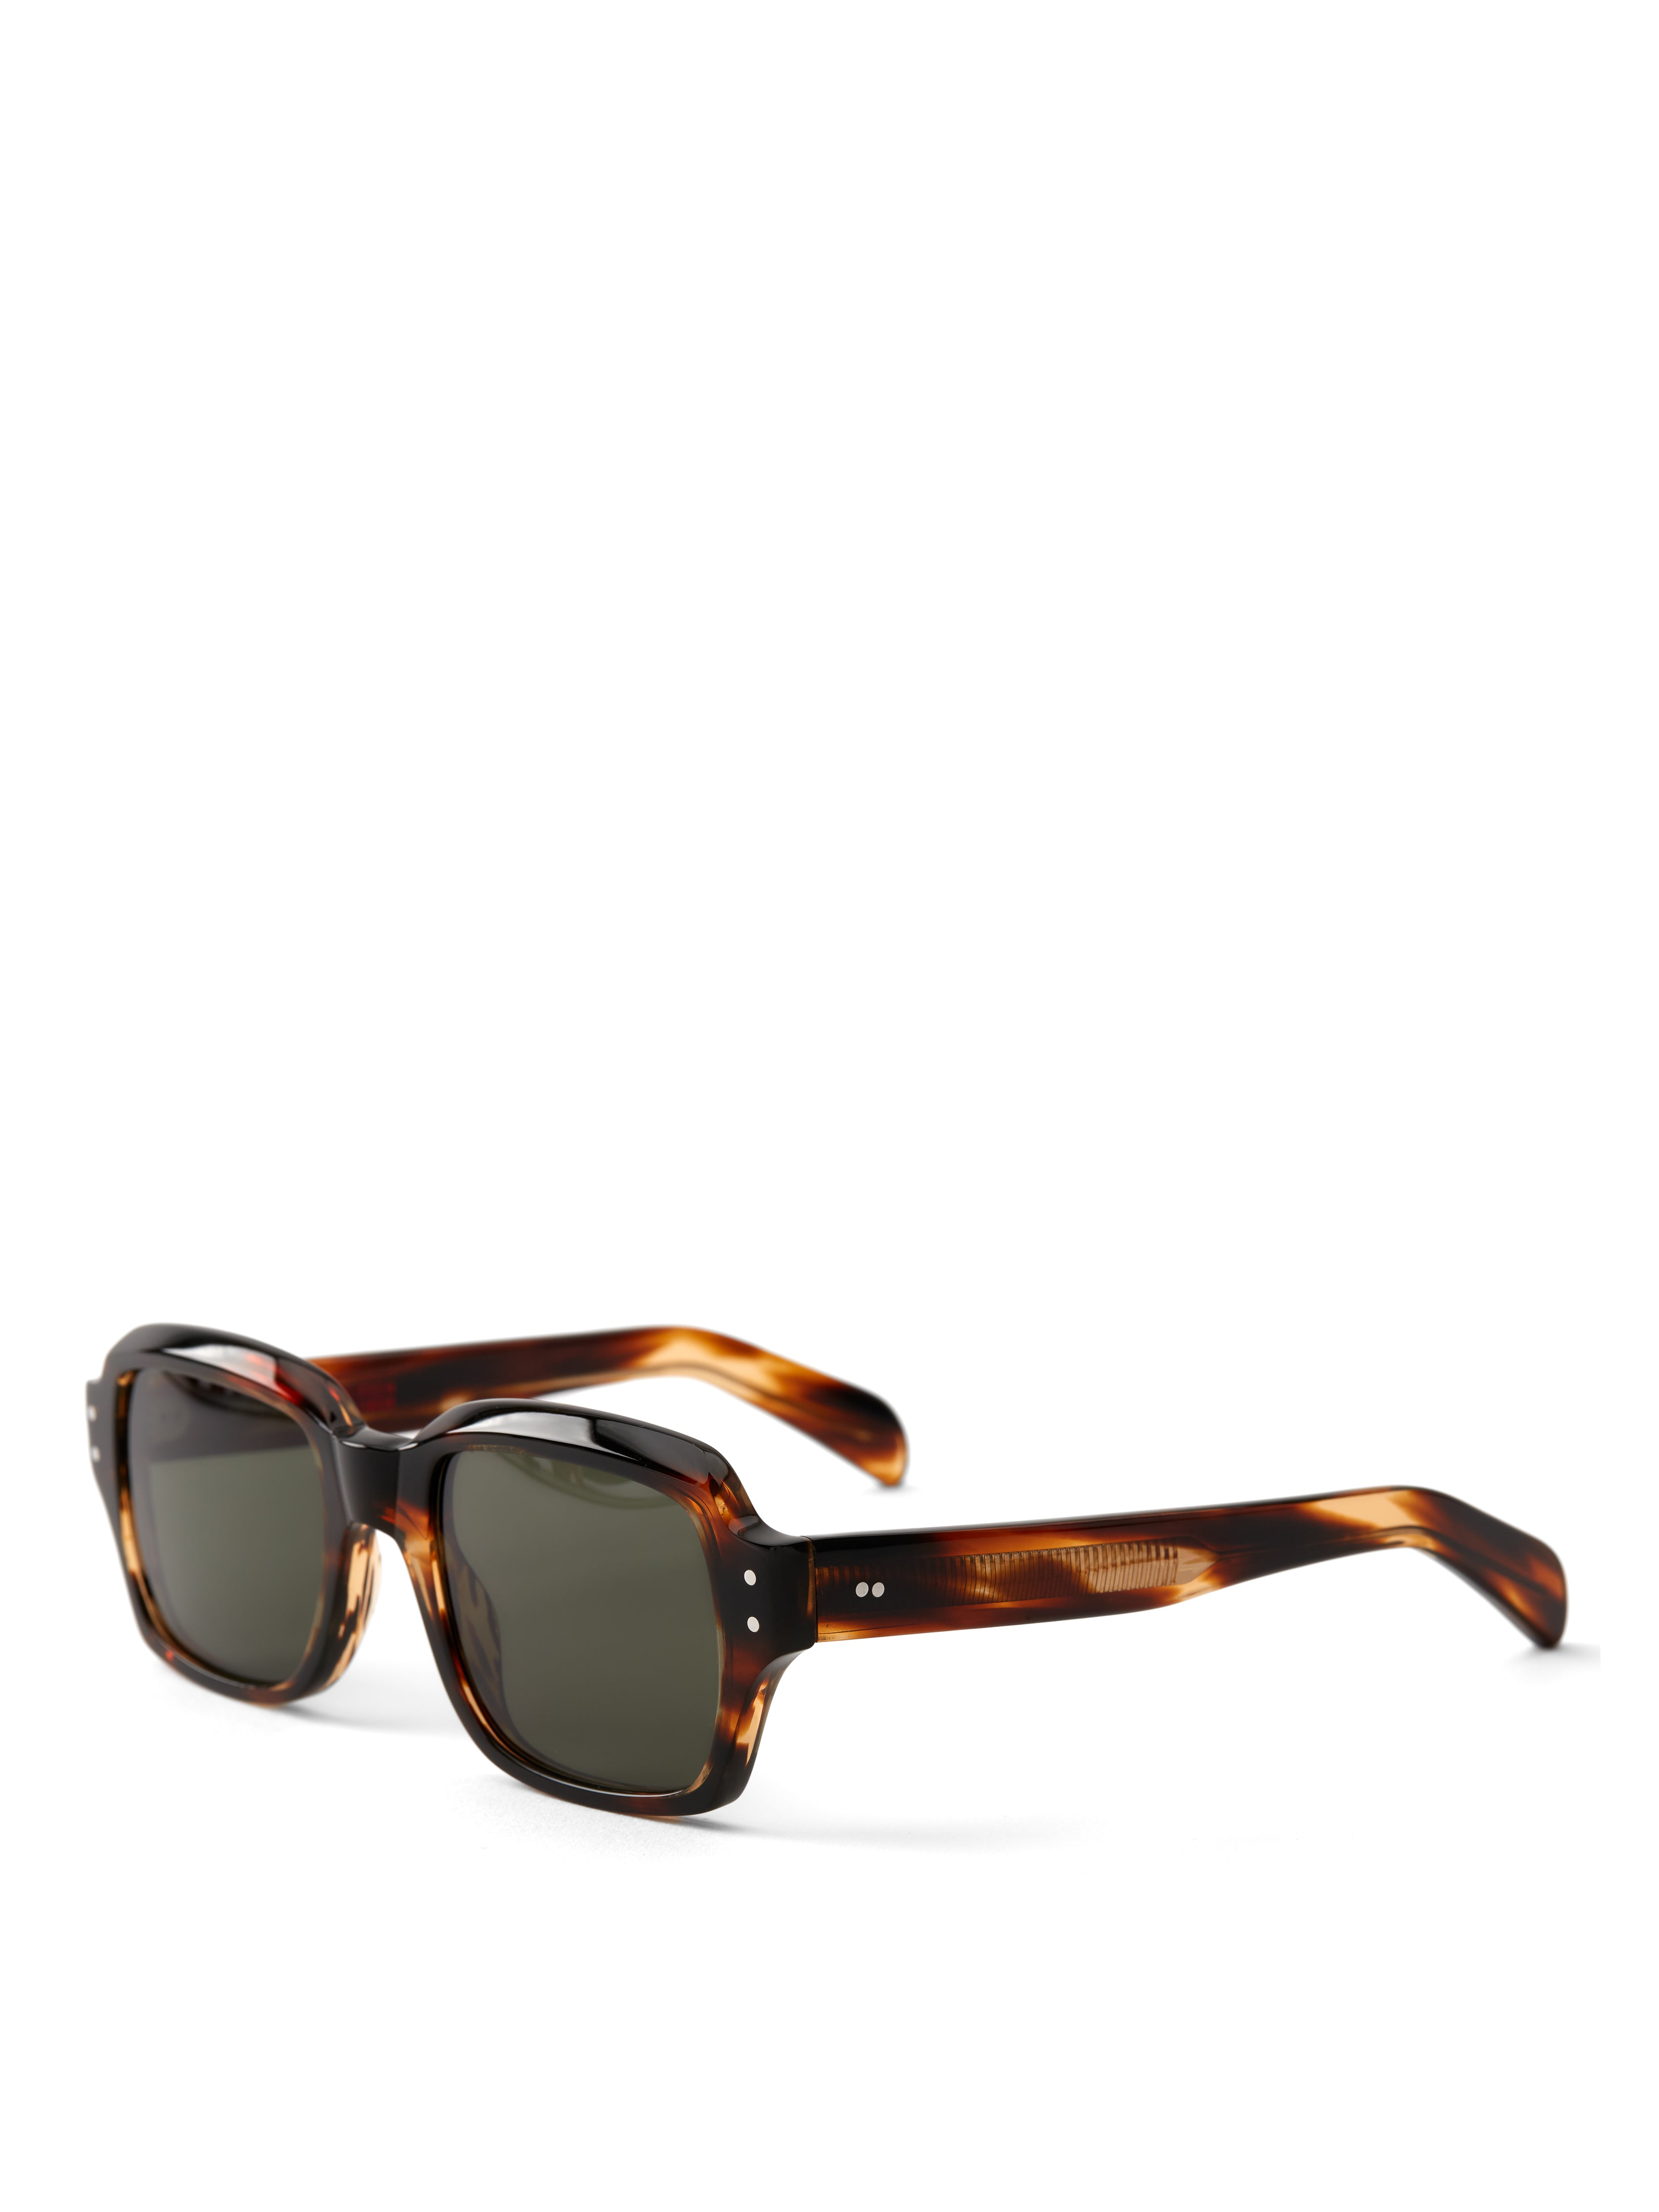 Cubitts x Oliver Spencer Conduit Sunglasses Chocolate Tortoiseshell